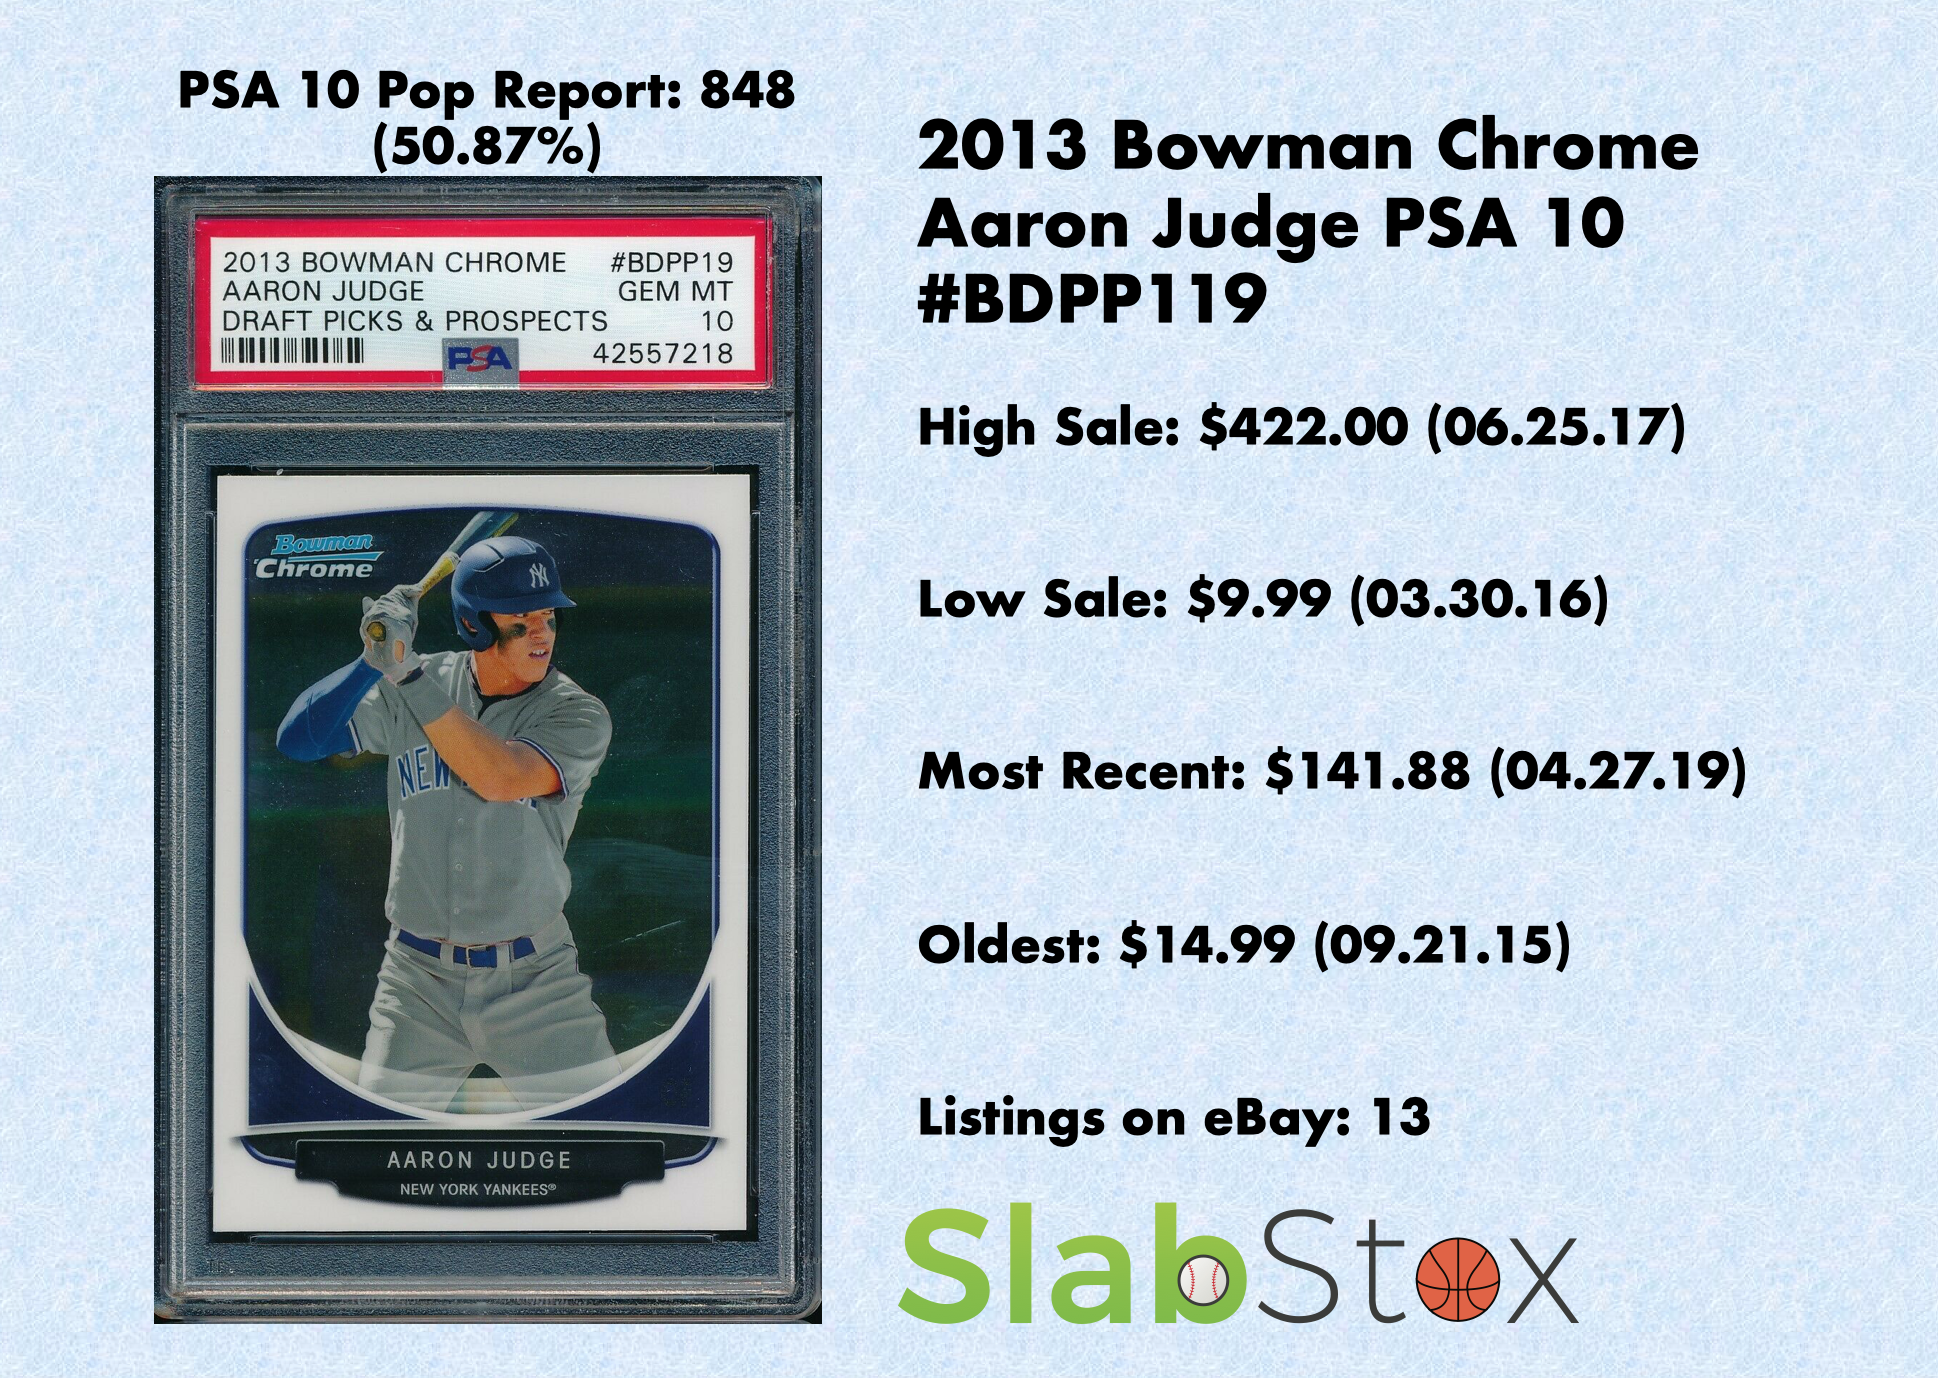 2013 Bowman Chrome Aaron Judge PSA 10 sports card